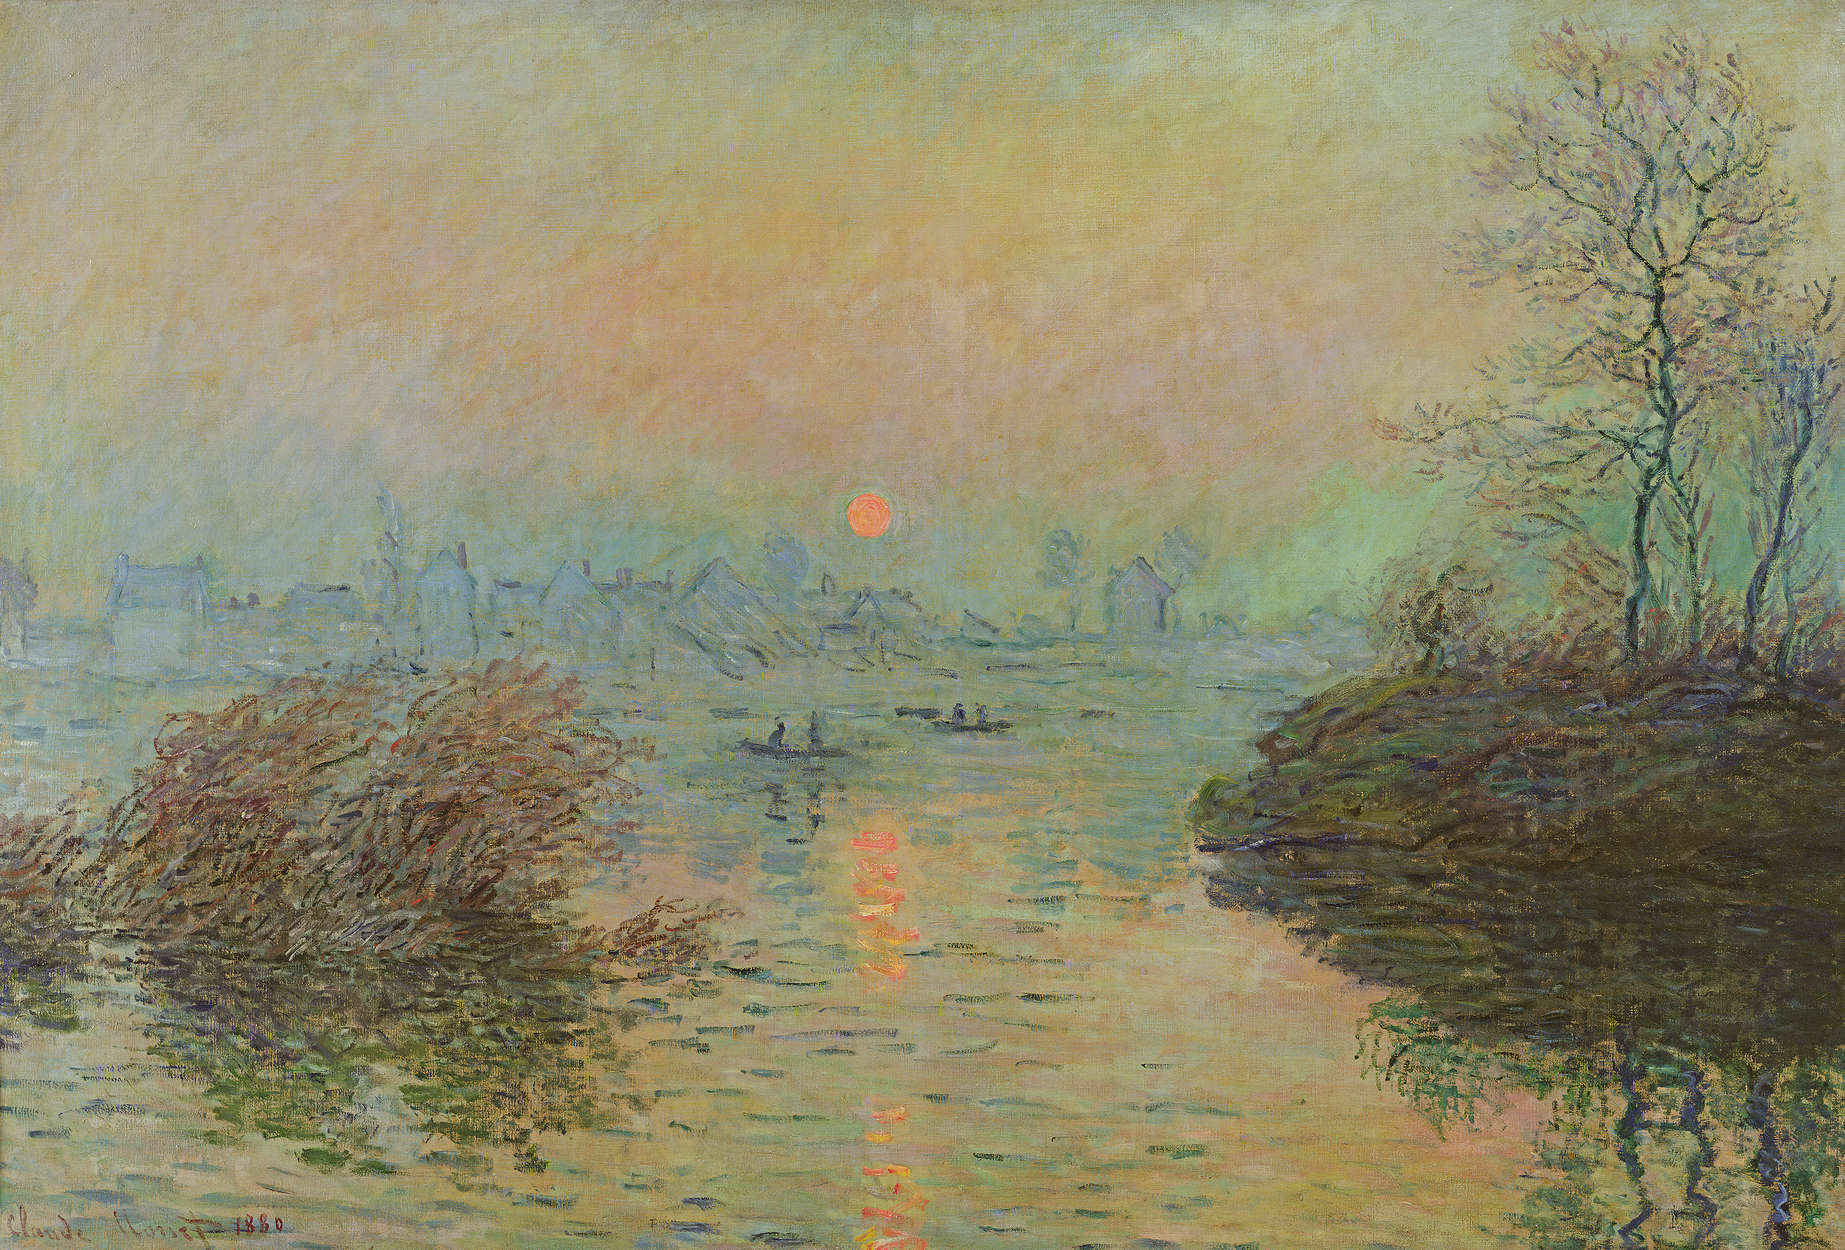             Mural "Puesta de sol sobre el Sena en Lavacourt" de Claude Monet
        